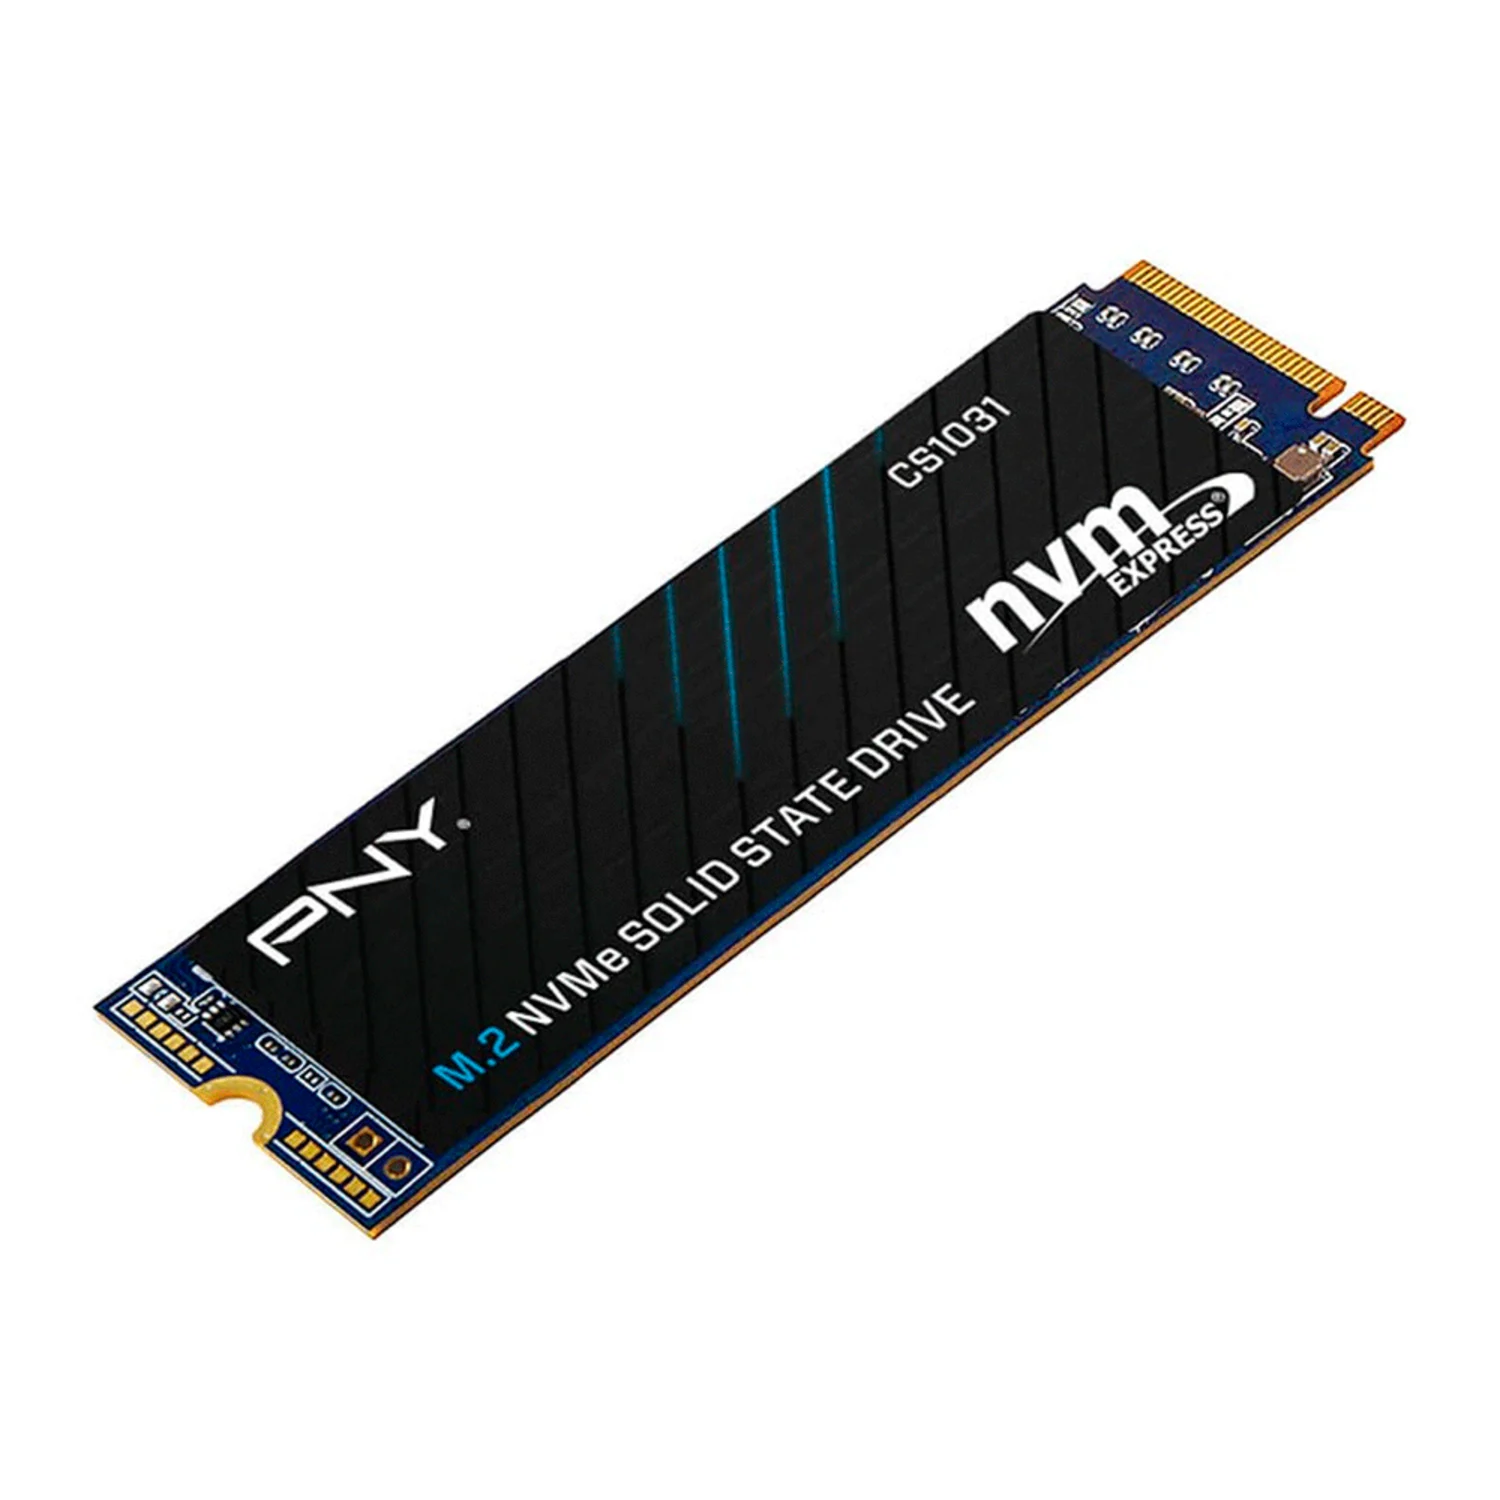 SSD M.2 PNY 256GB NVMe PCIe Gen3 - (M280CS1031-256-CL)